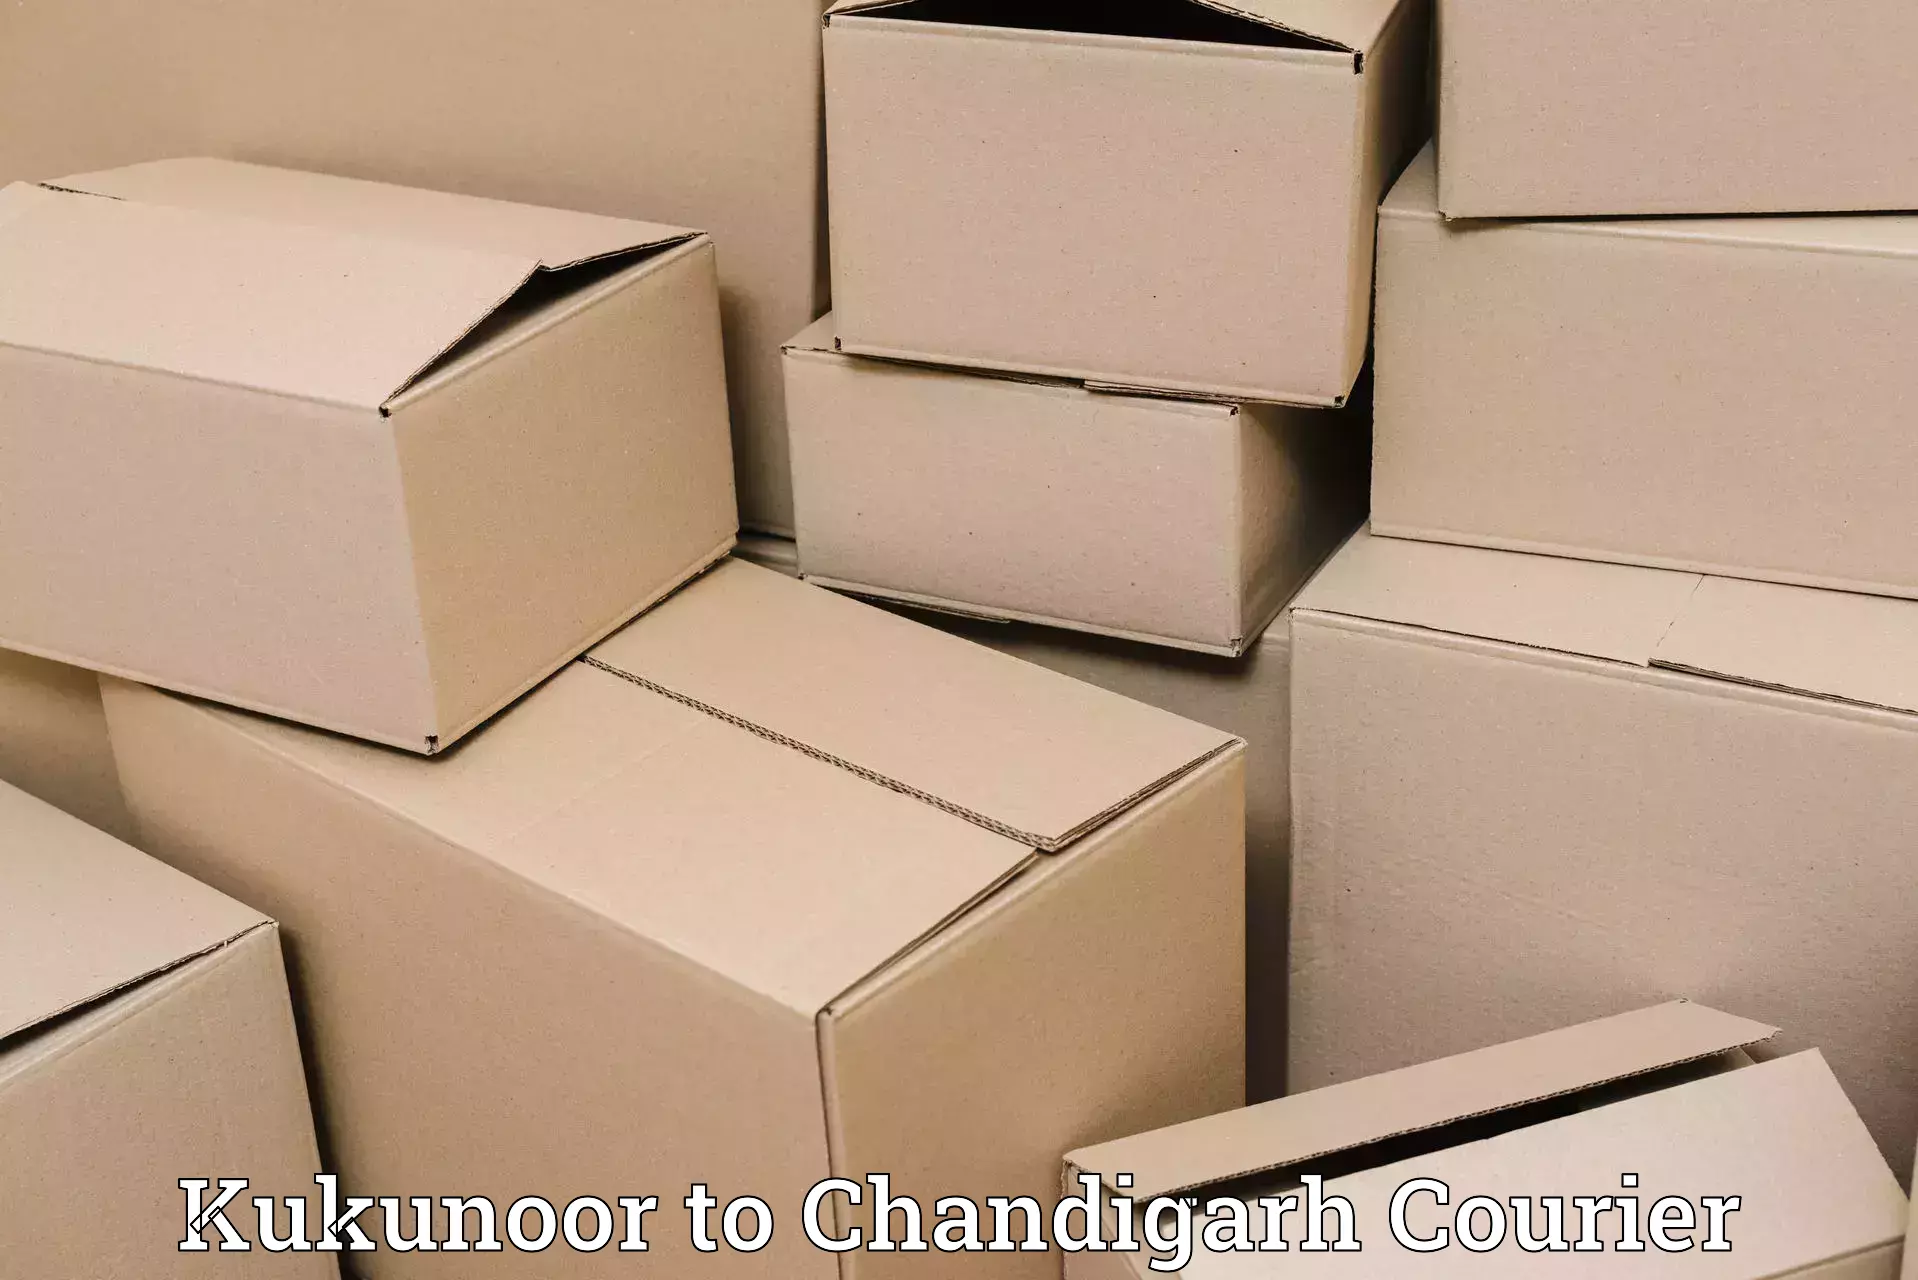 User-friendly delivery service Kukunoor to Chandigarh